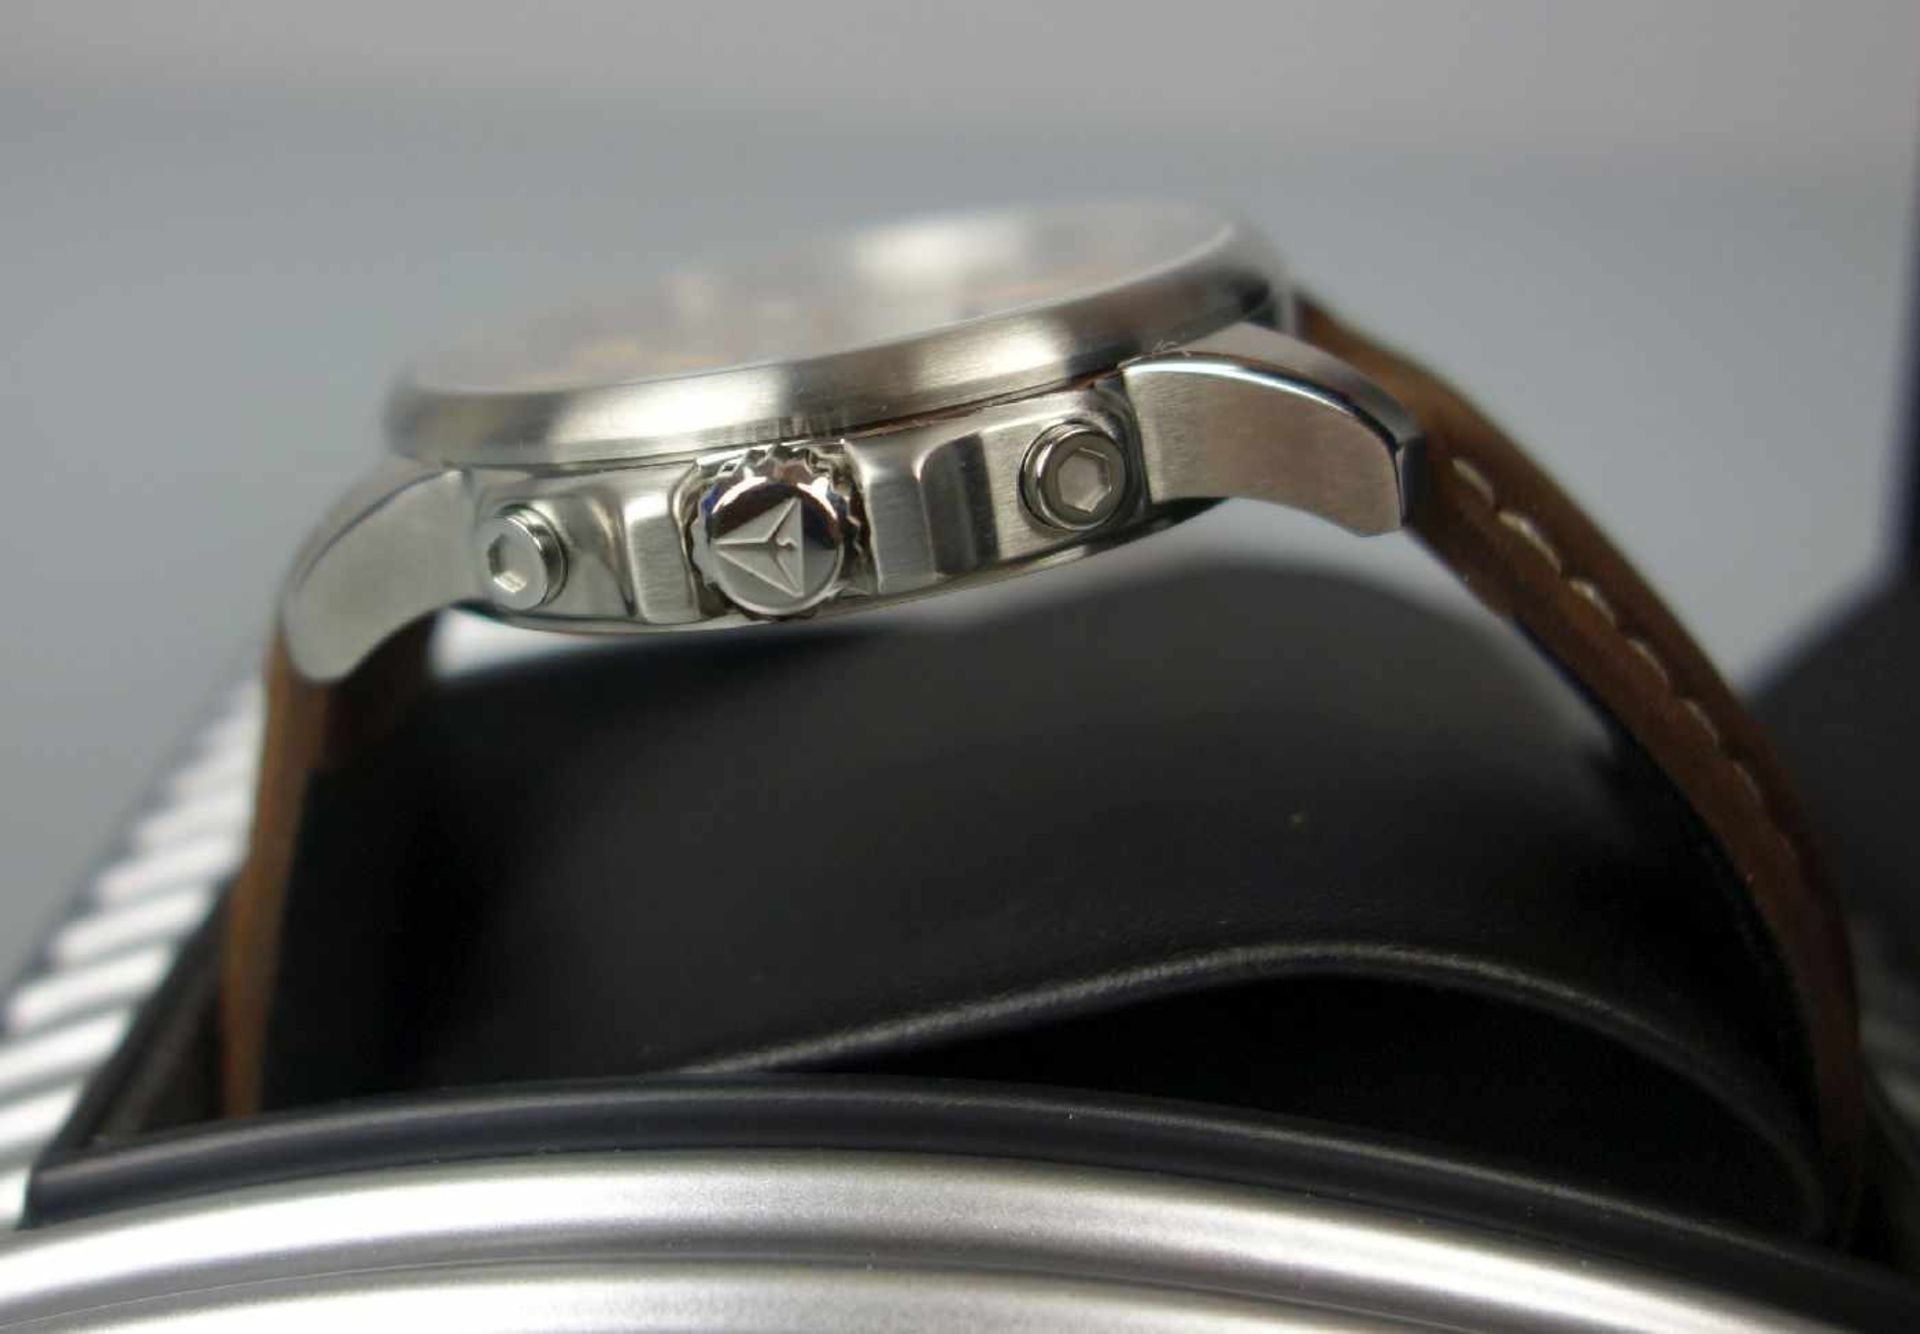 JUNKERS ARMBANDUHR JUNKERS / wristwatch, Quartz-Uhr, Manufaktur Point tec Electronic GmbH / - Image 4 of 5